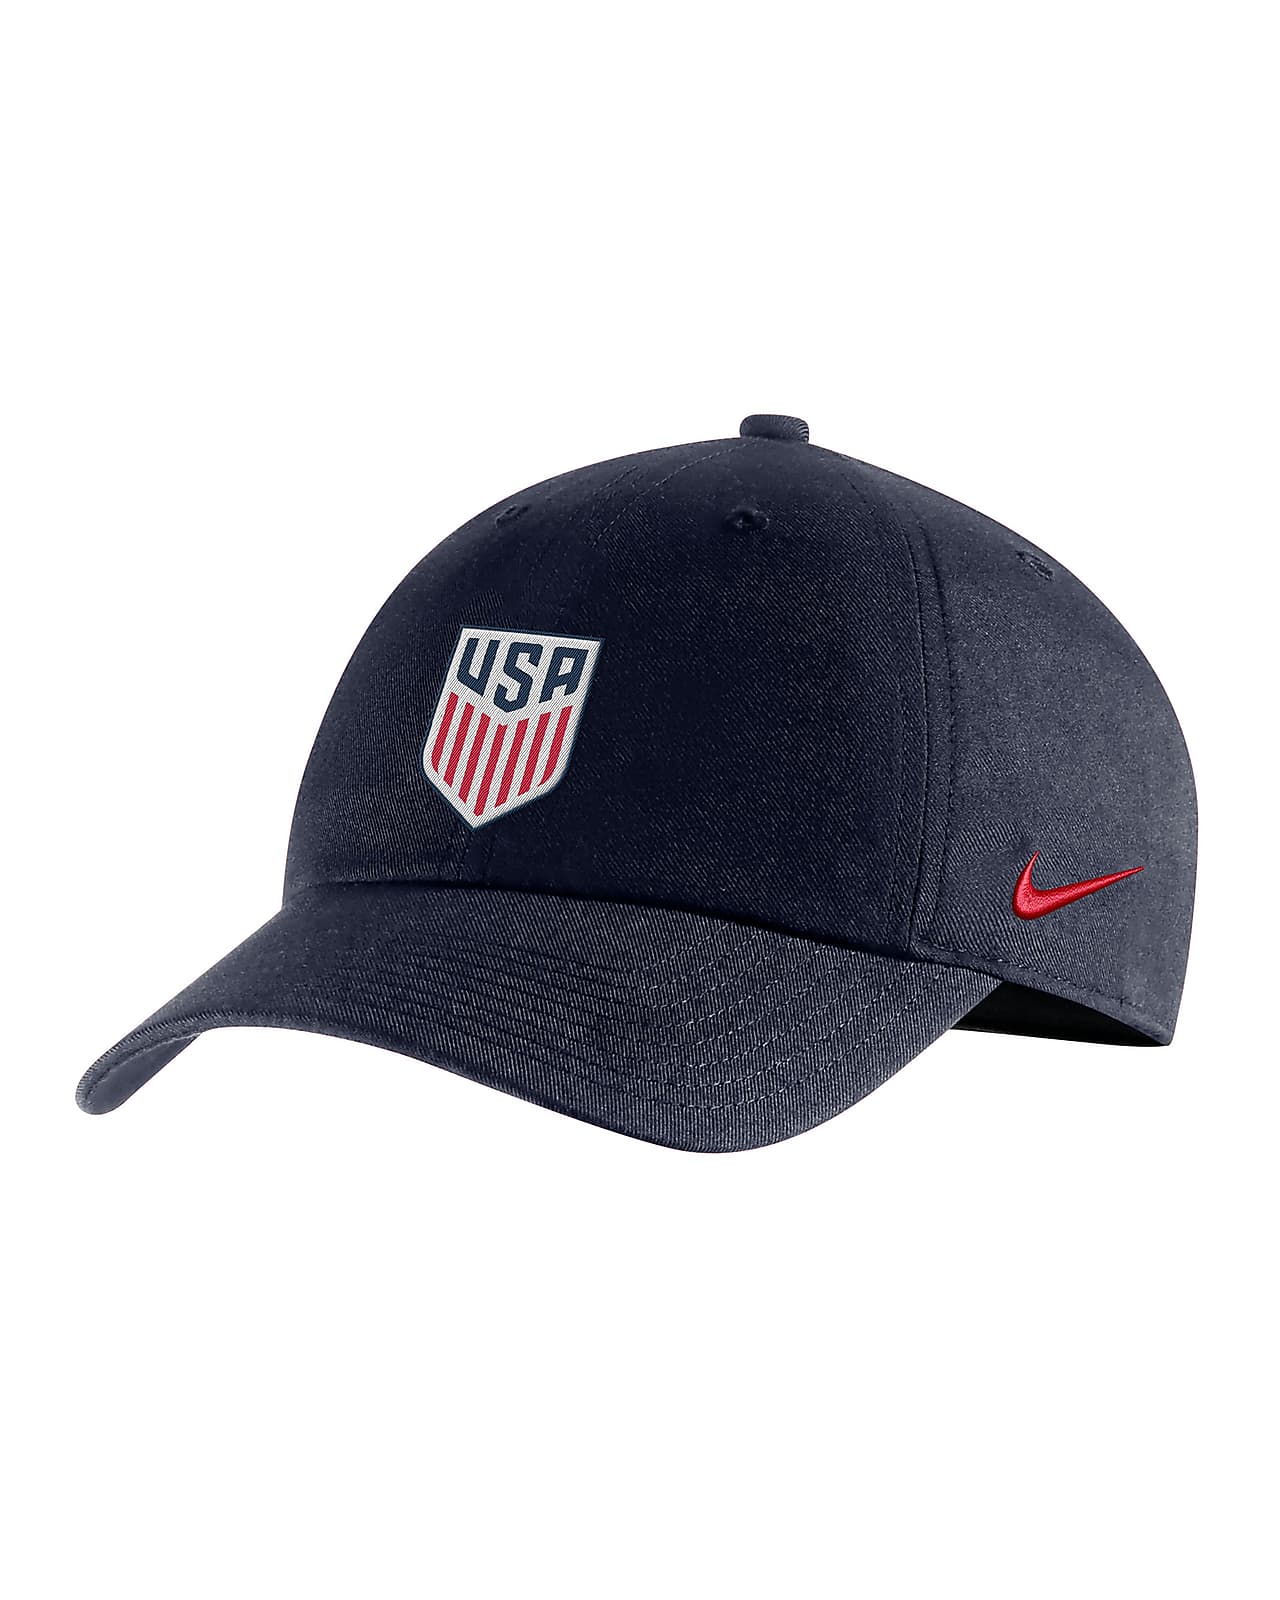 Betekenis Weigeren Gezag USMNT Heritage86 Men's Adjustable Hat. Nike.com